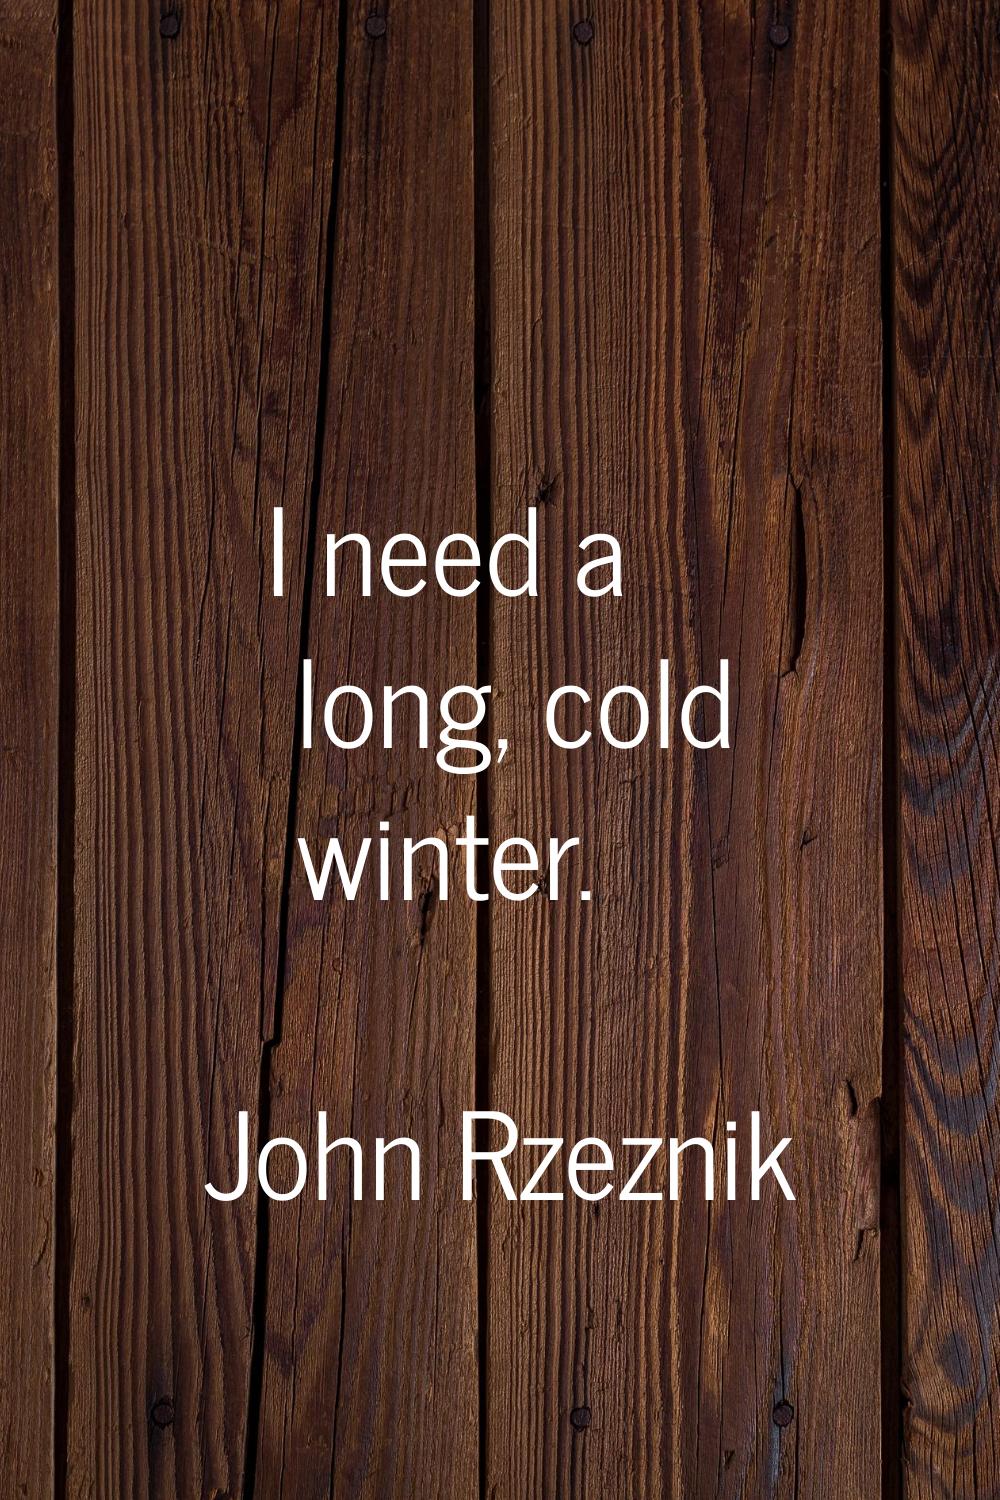 I need a long, cold winter.